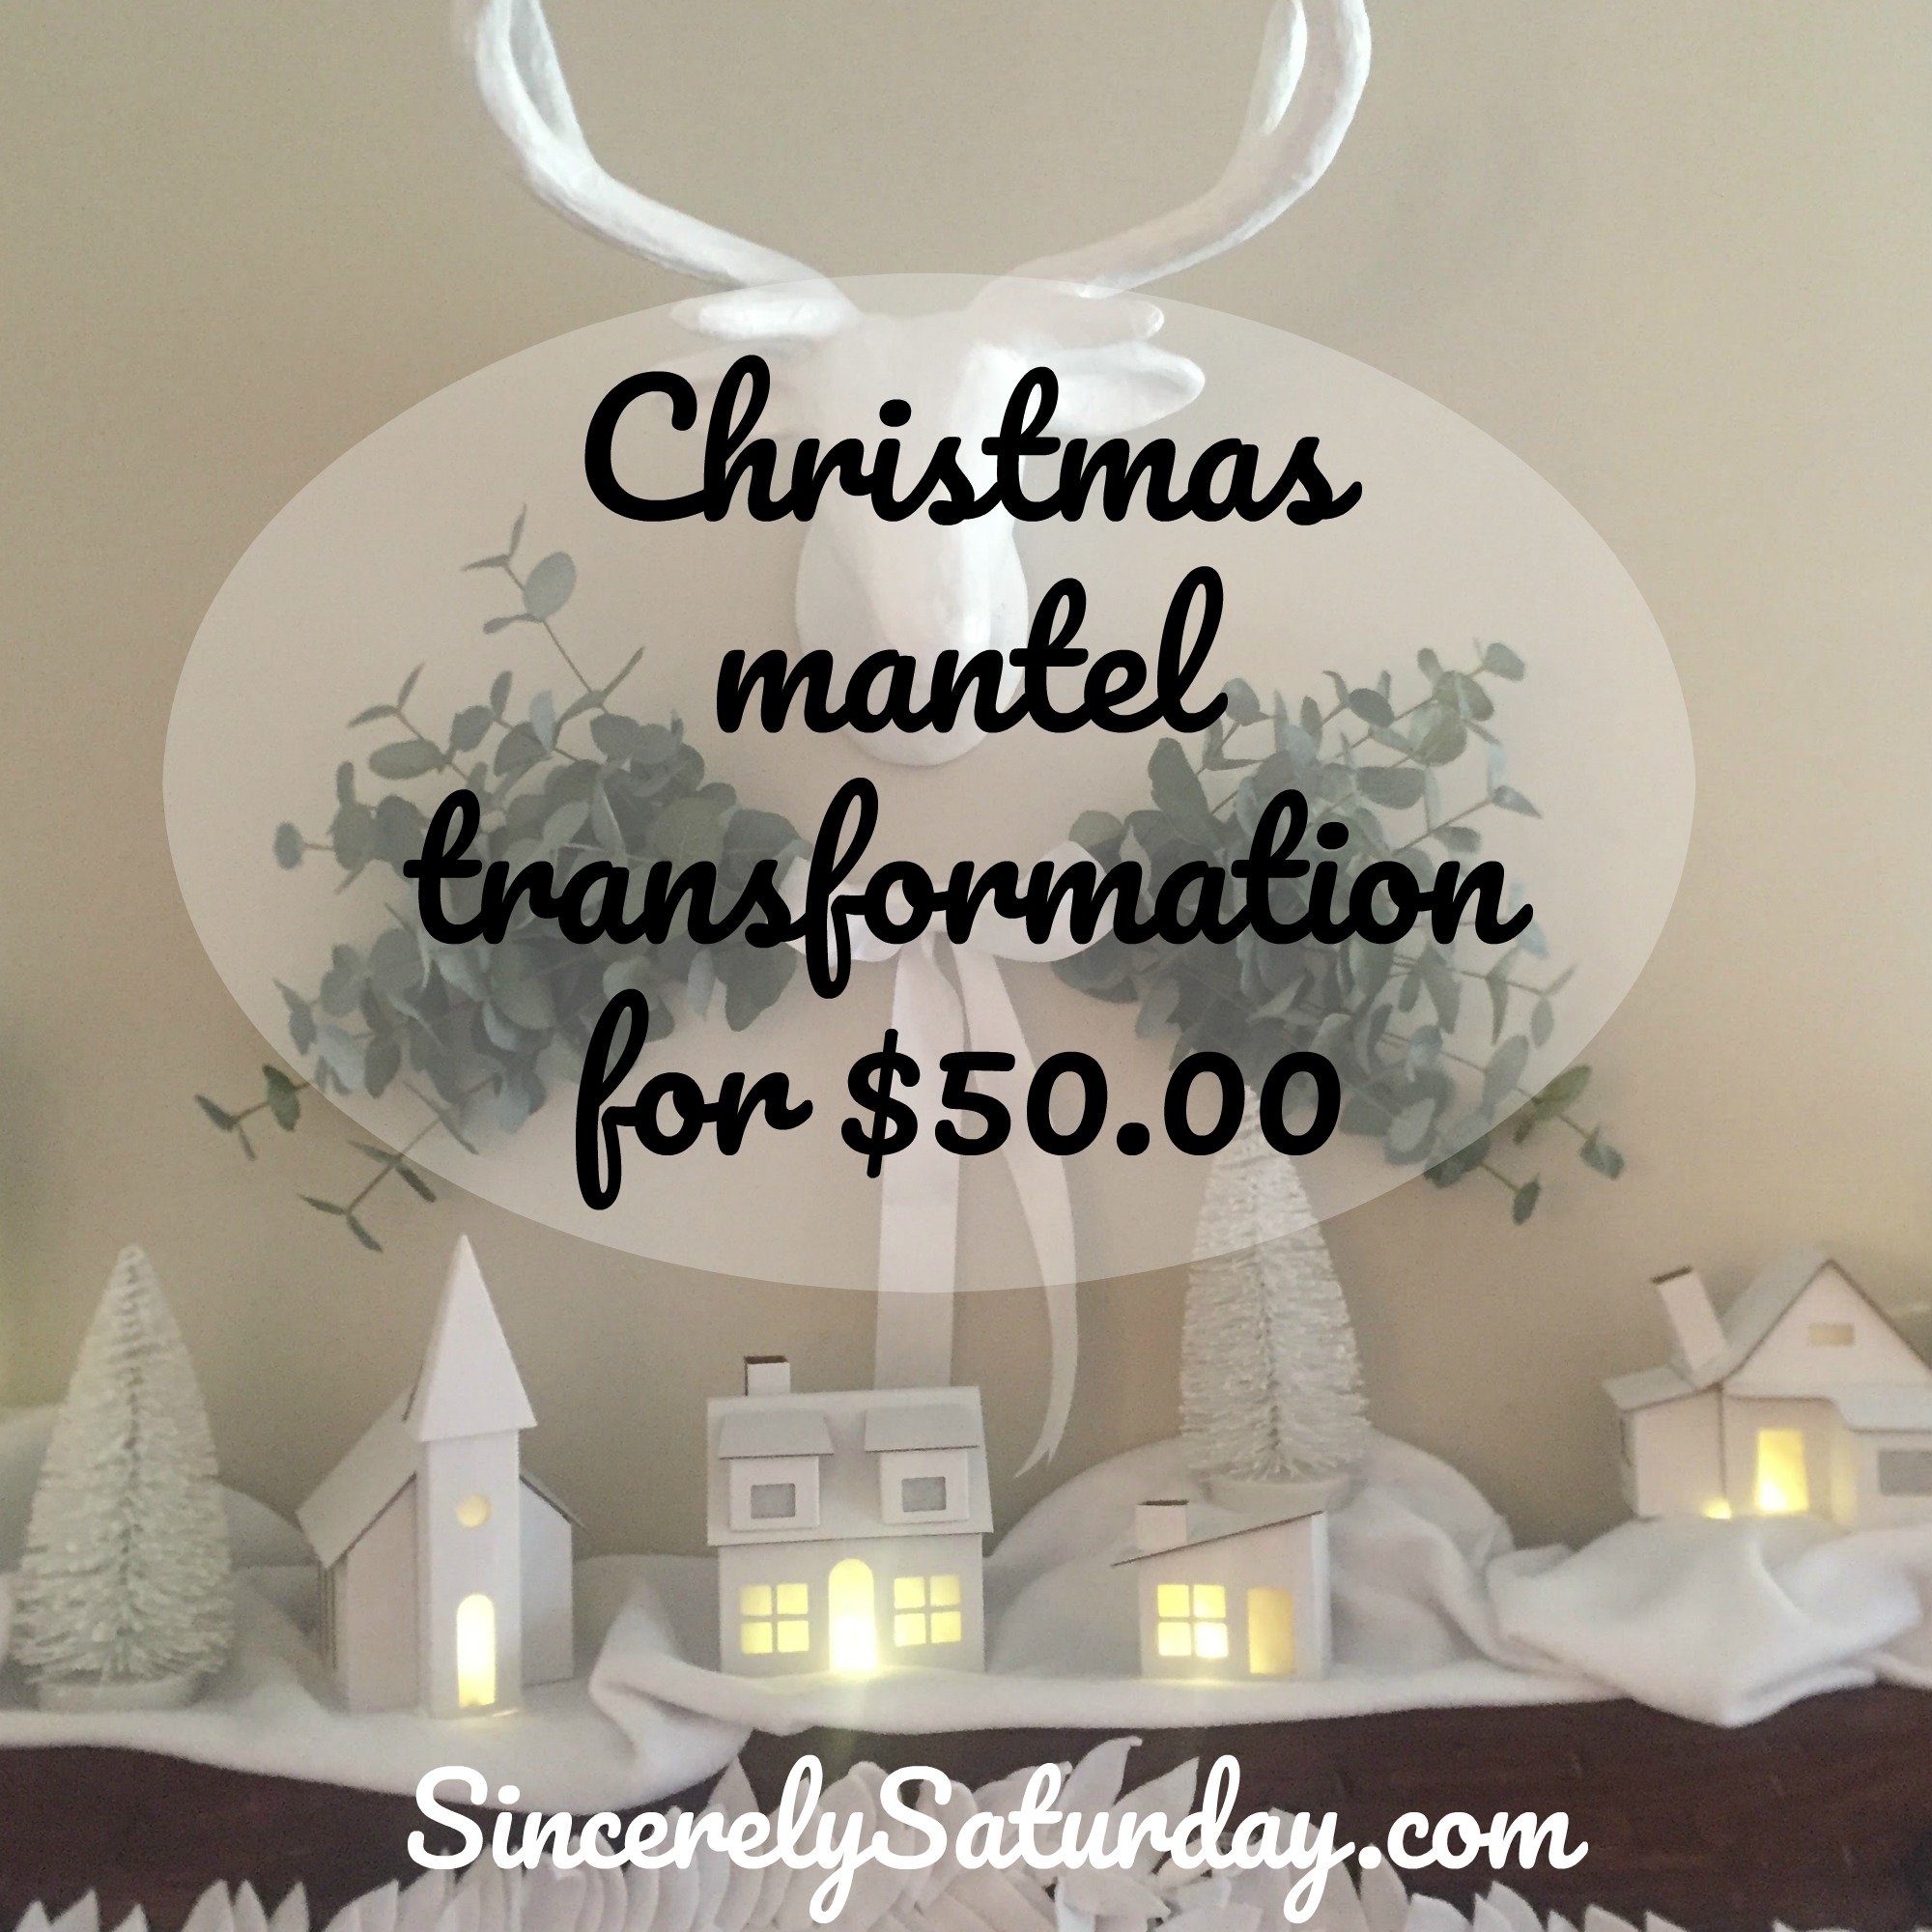 Christmas mantel transformation for $50.00